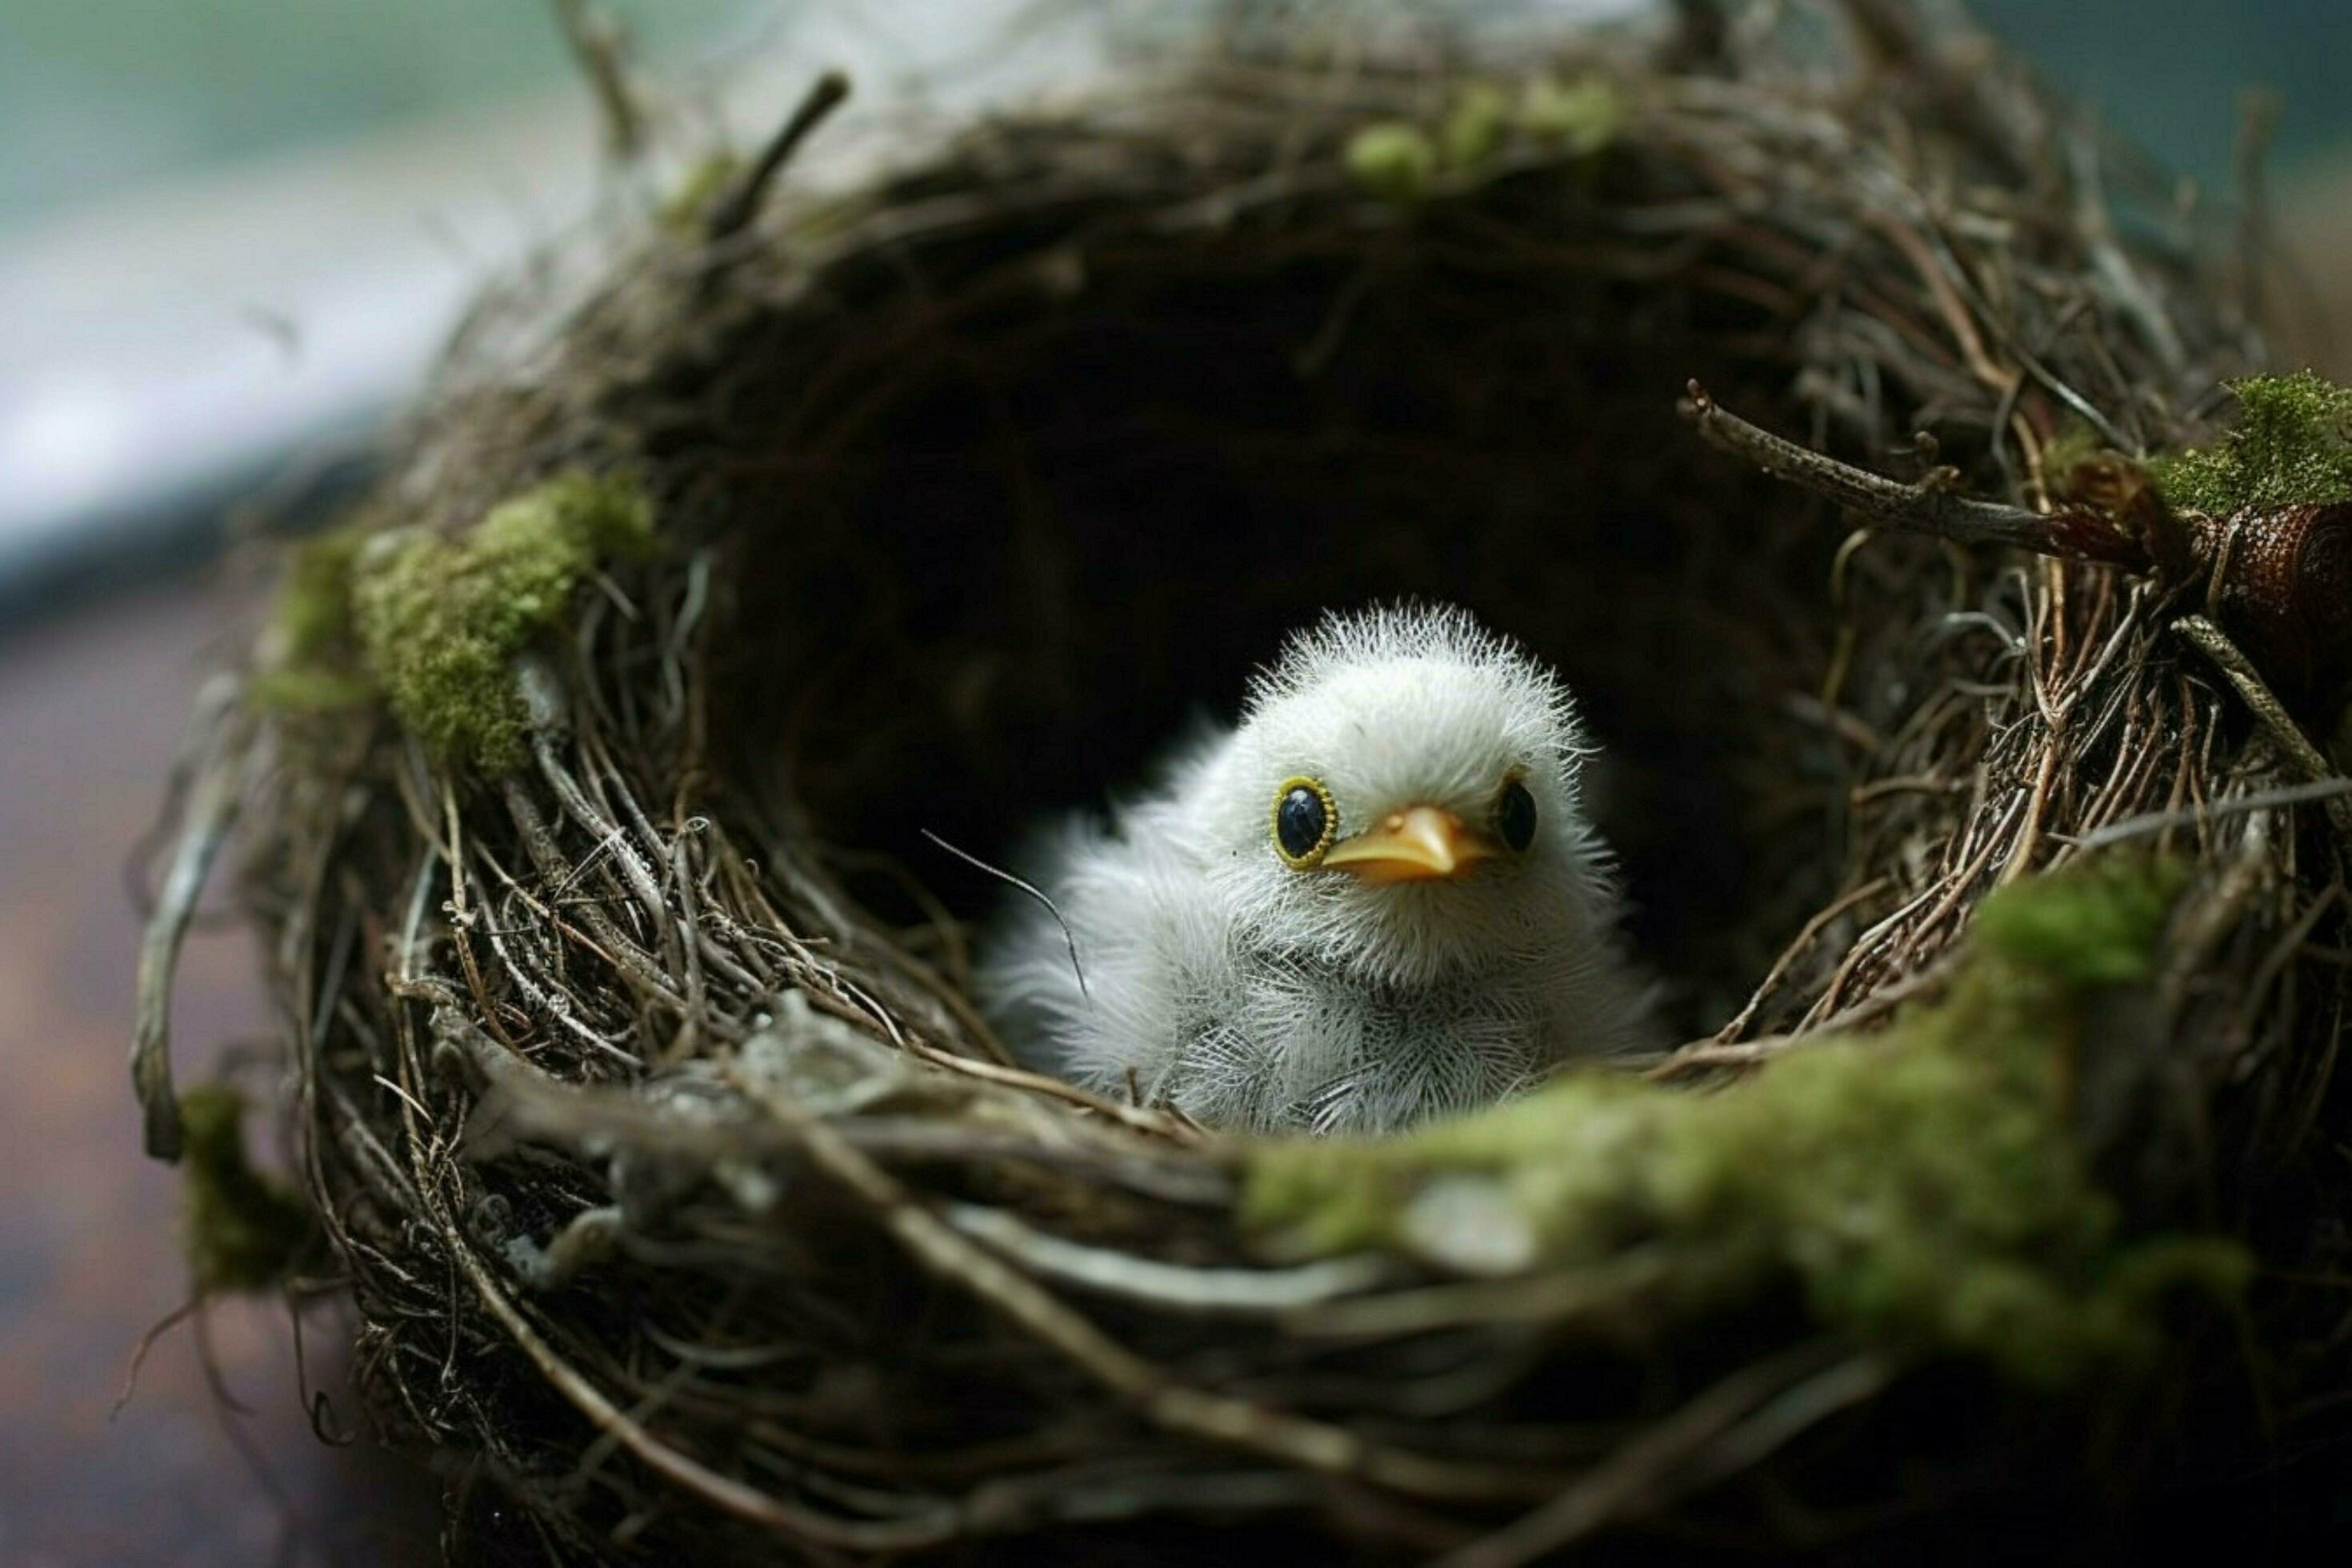 cute baby birds in nest